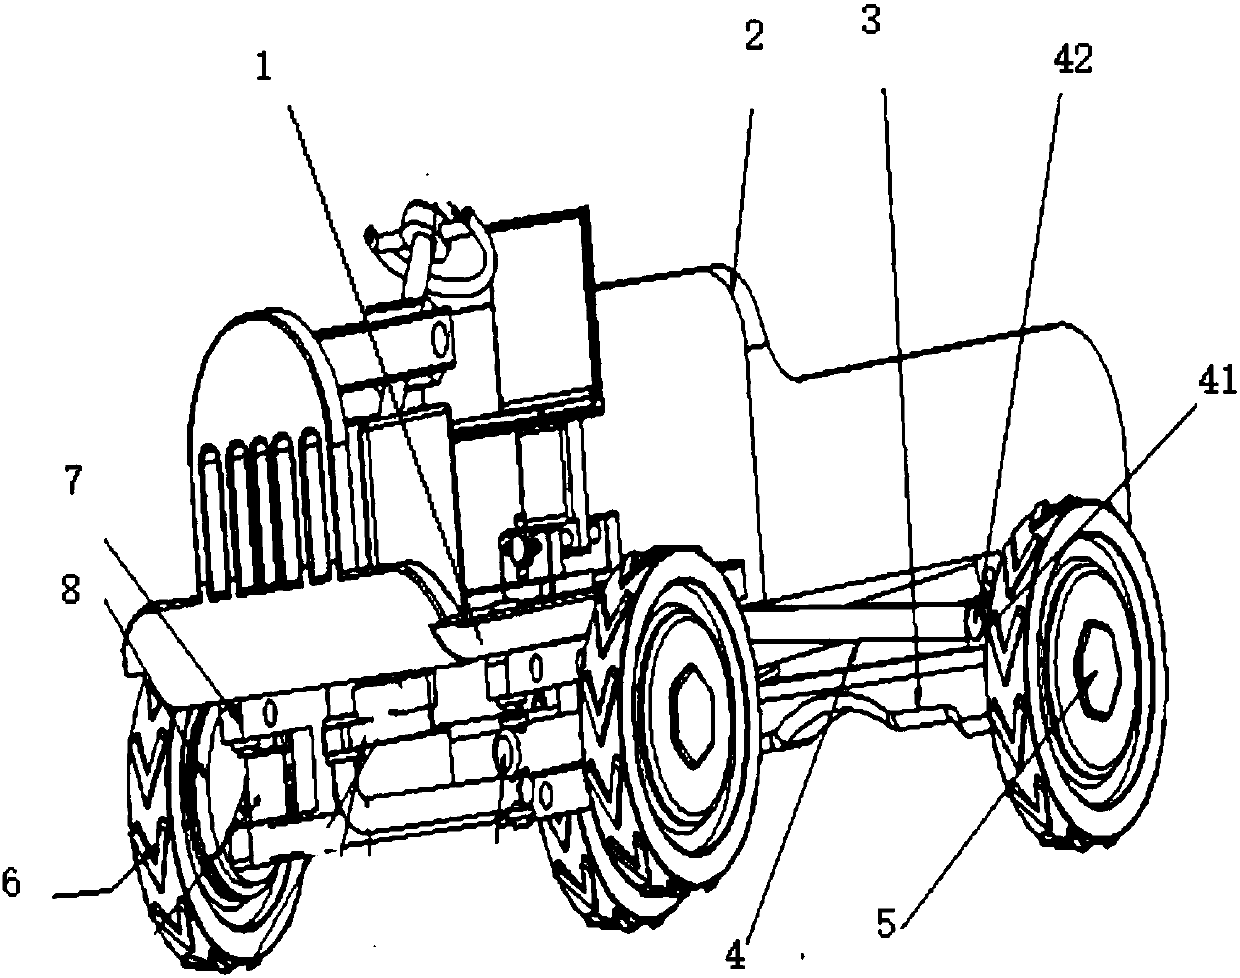 Novel cargo transport car structure